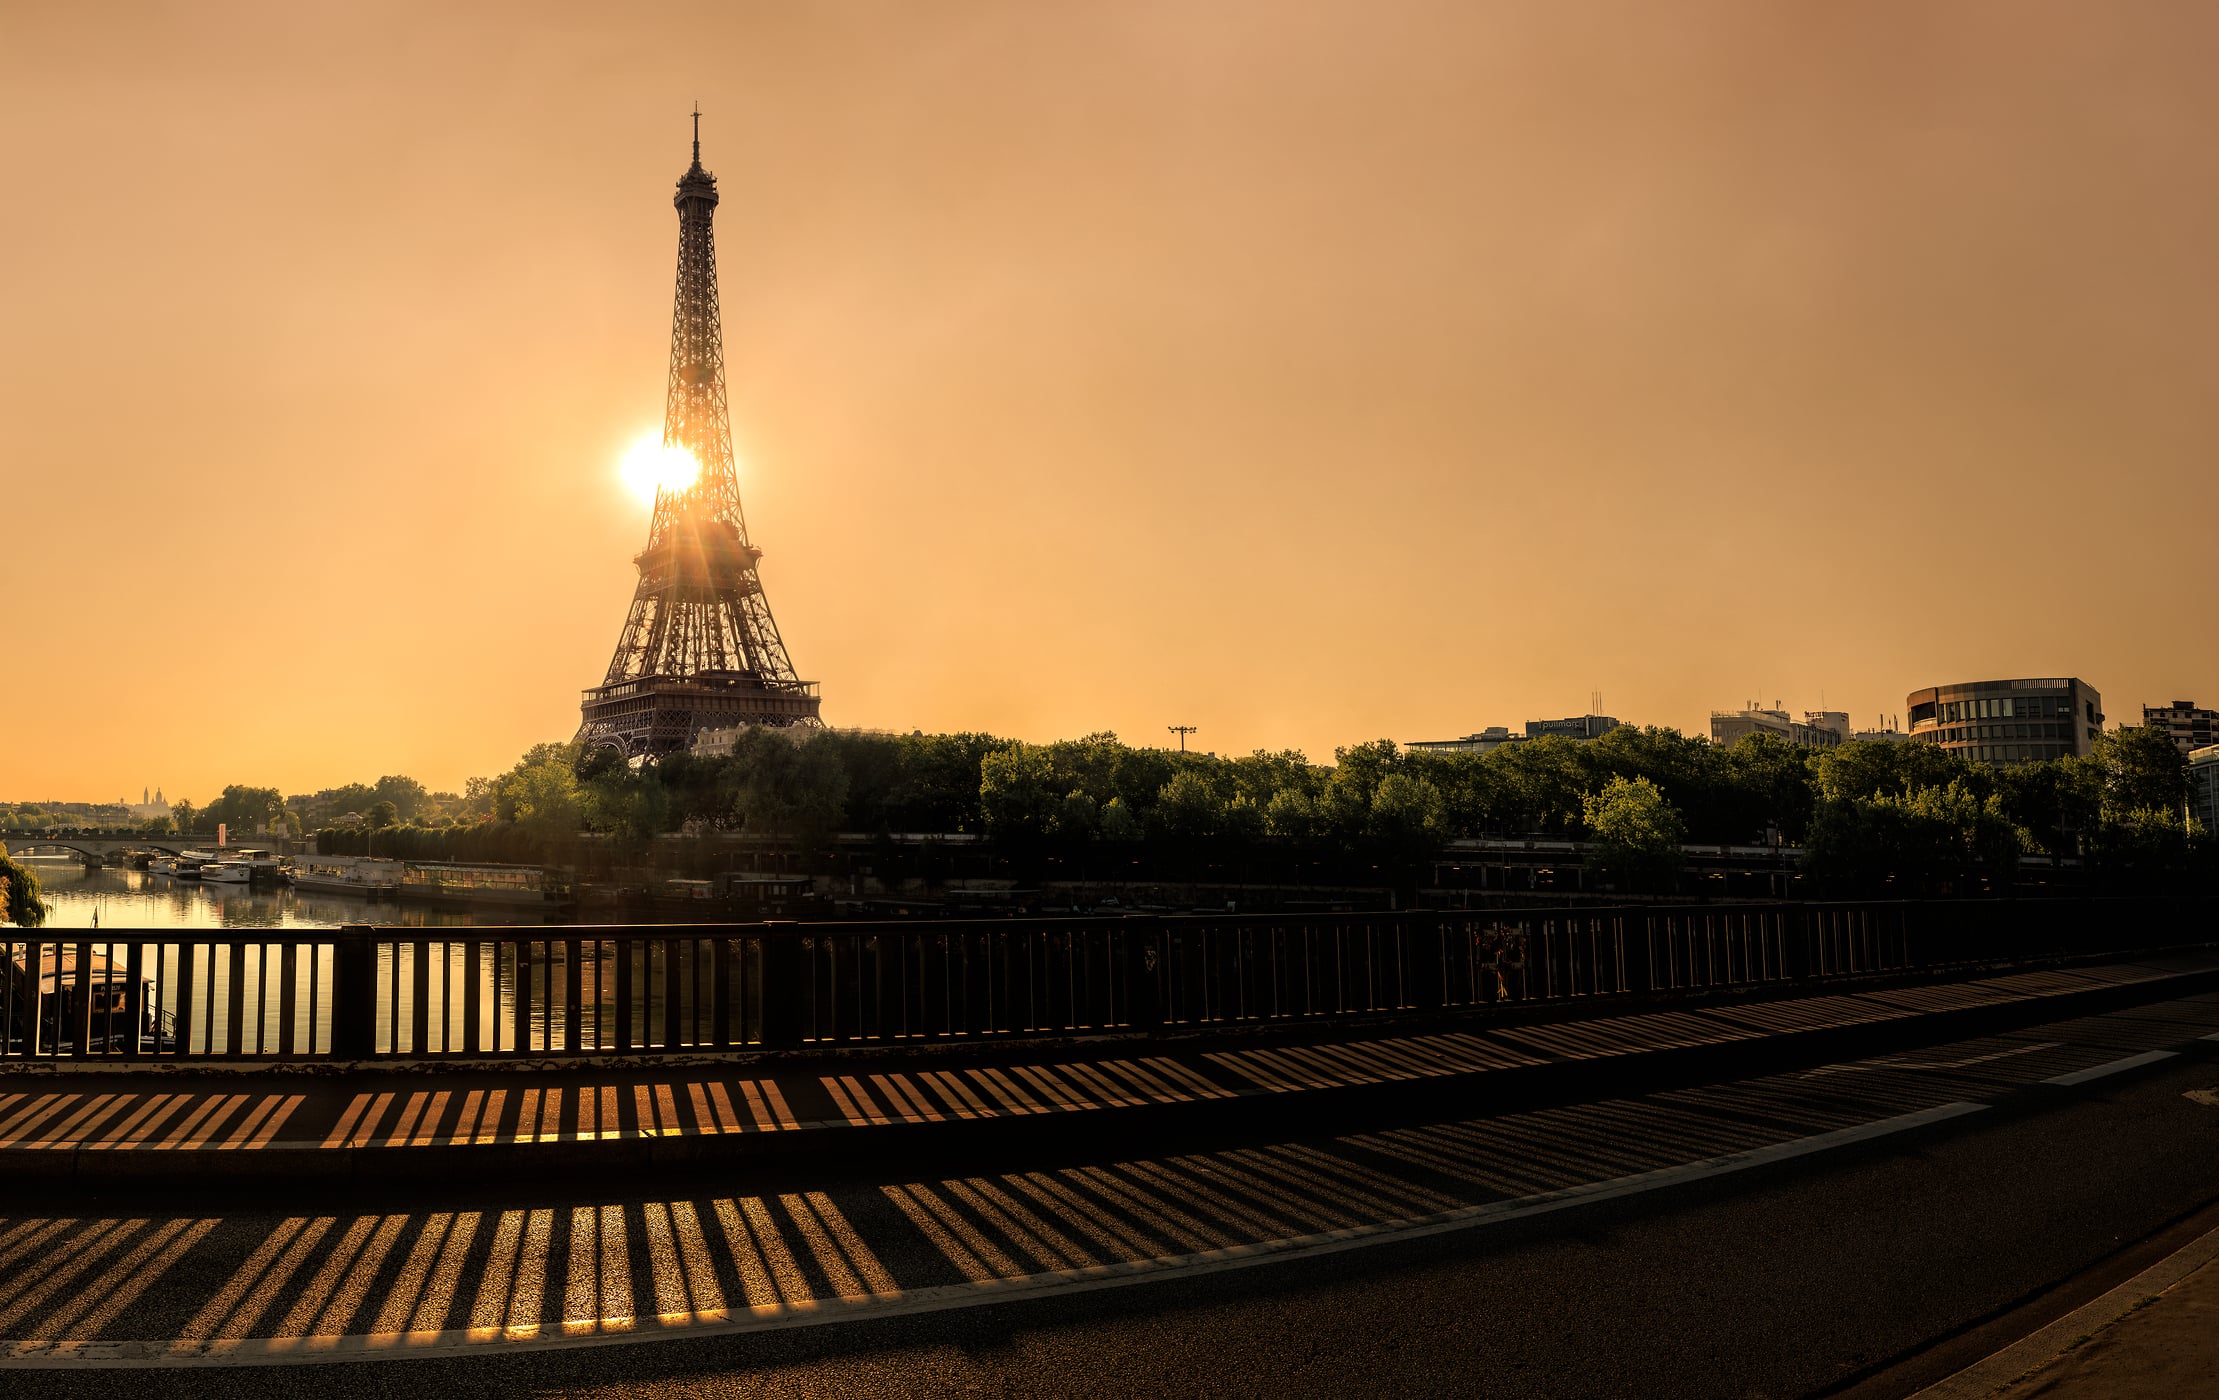 767 megapixels! A very high resolution, large-format VAST photo print of the Eiffel Tower at sunrise; landmark photograph created by Scott Dimond in Pont de Bir-Hakeim, Paris, France.